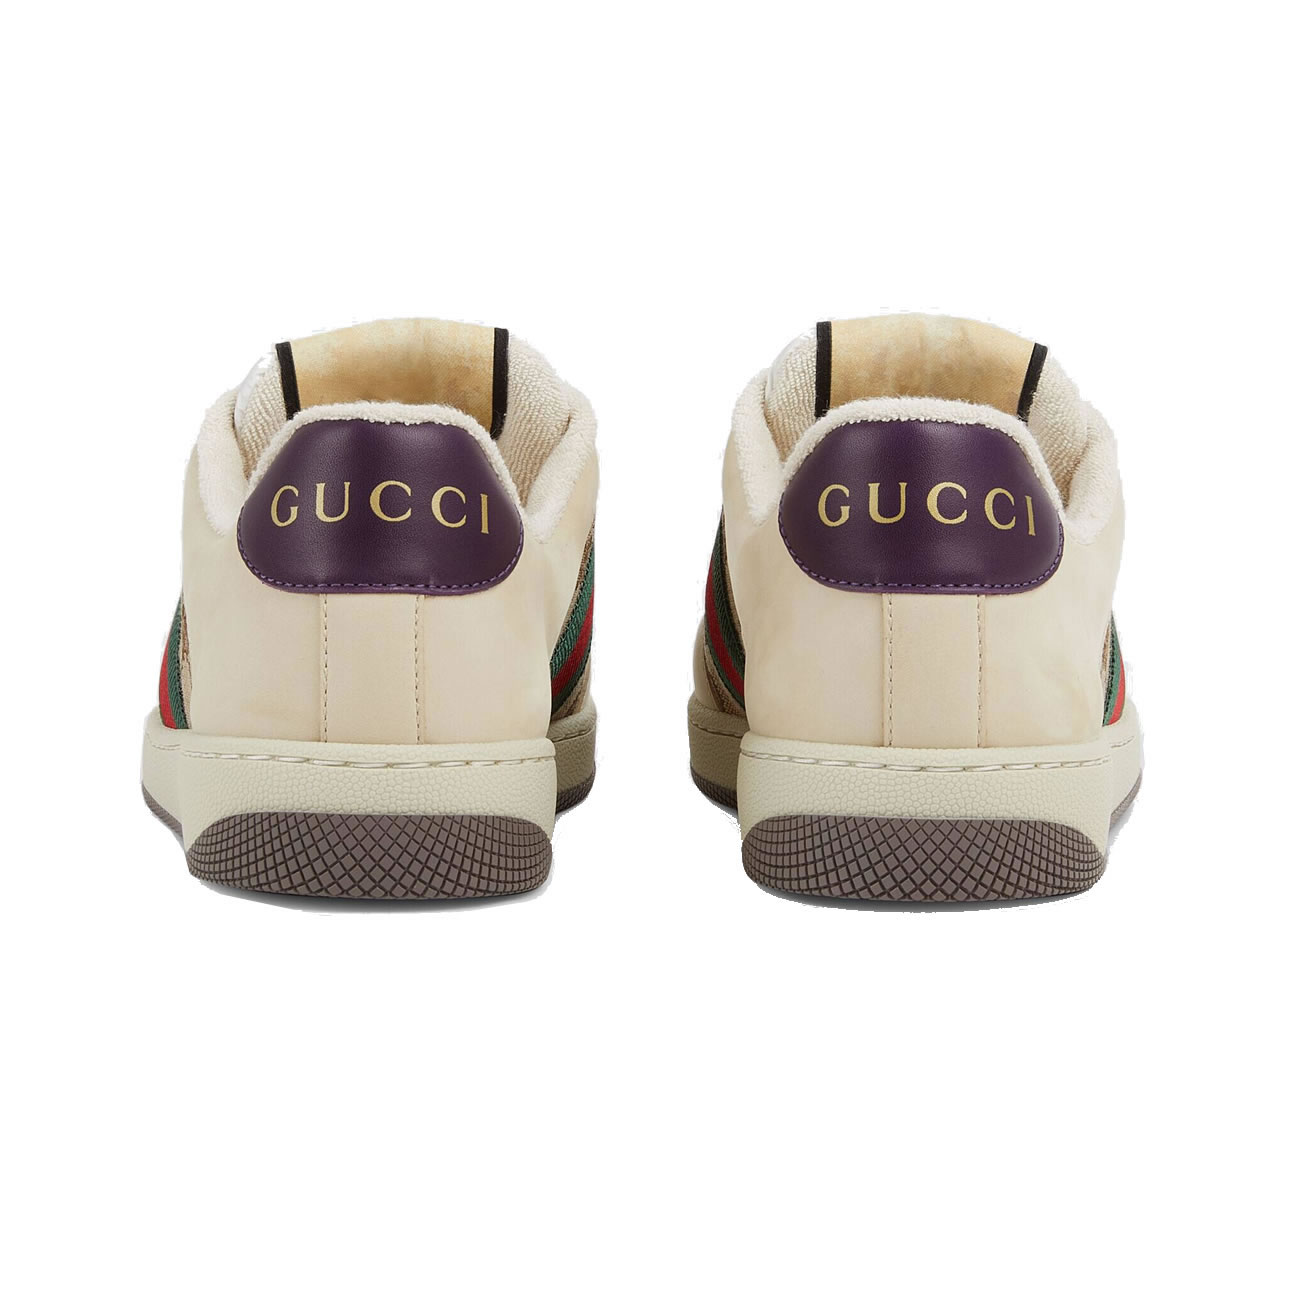 G U C C I Shoes Sneakers 4 Colors (42) - newkick.org